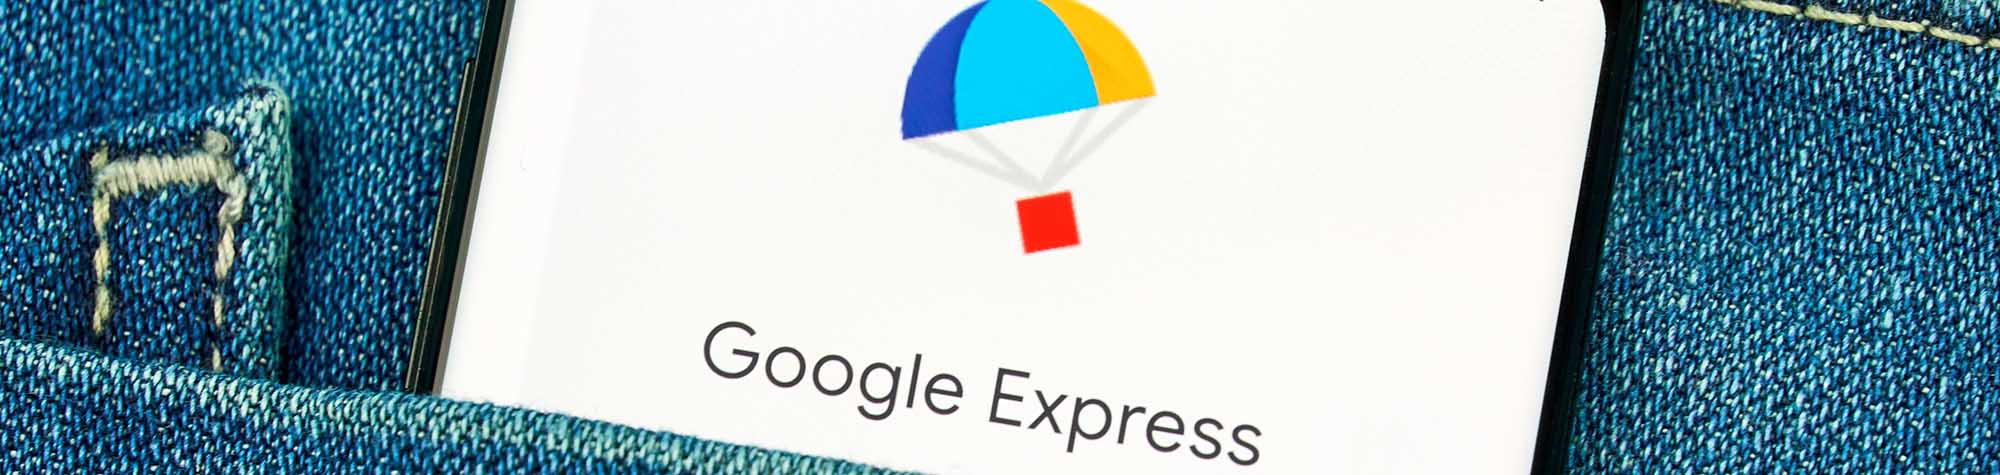 Google Express, Google’s marketplace getting closer